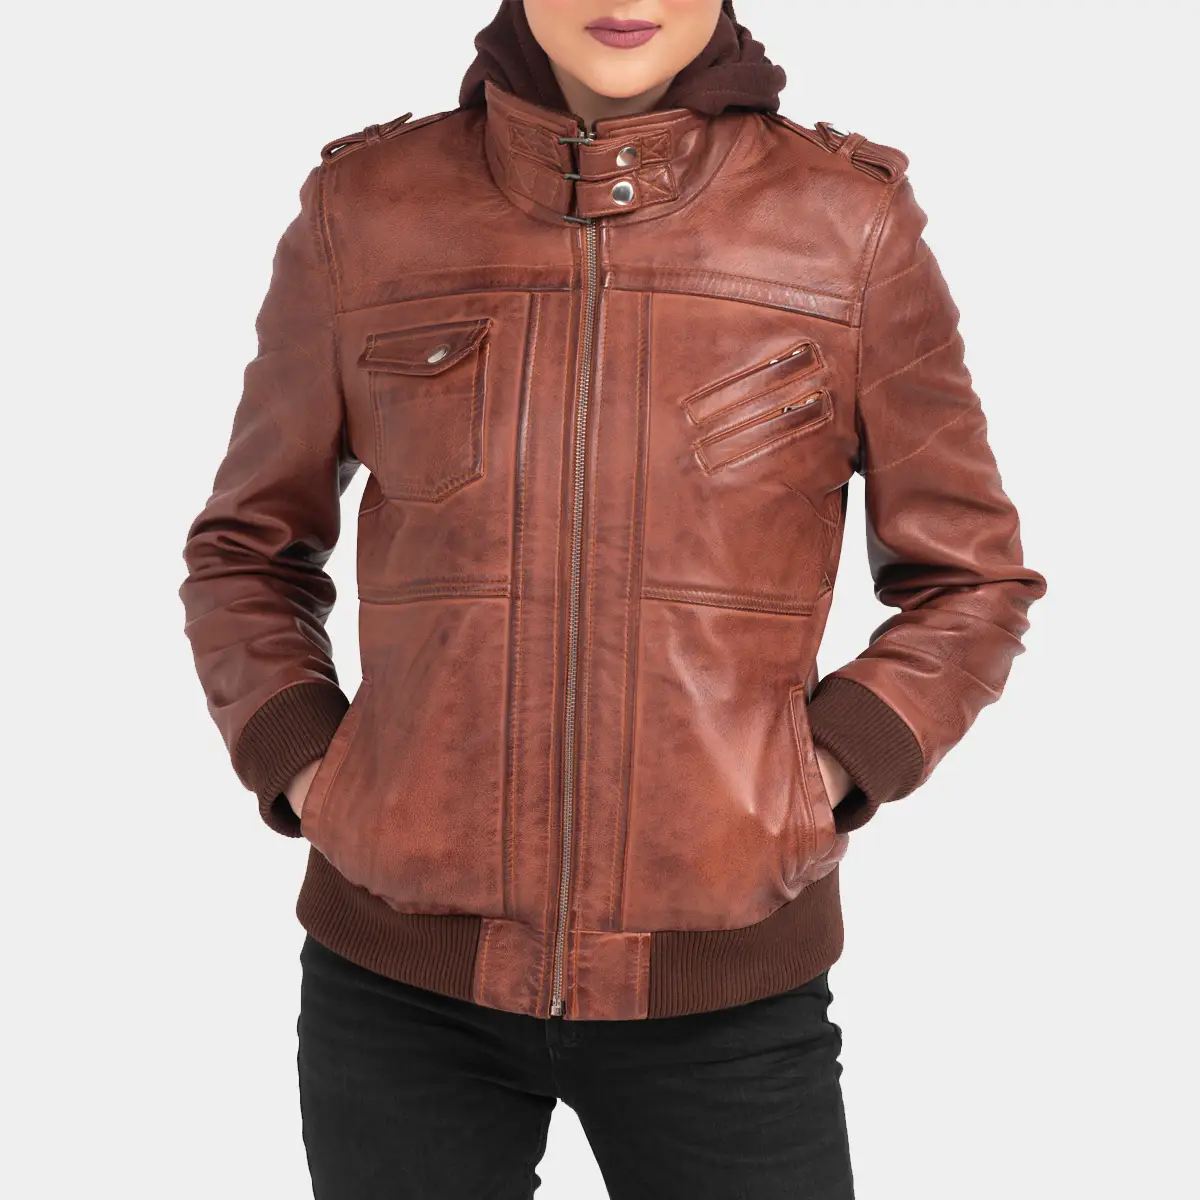 Edinburgh women leather jacket brown